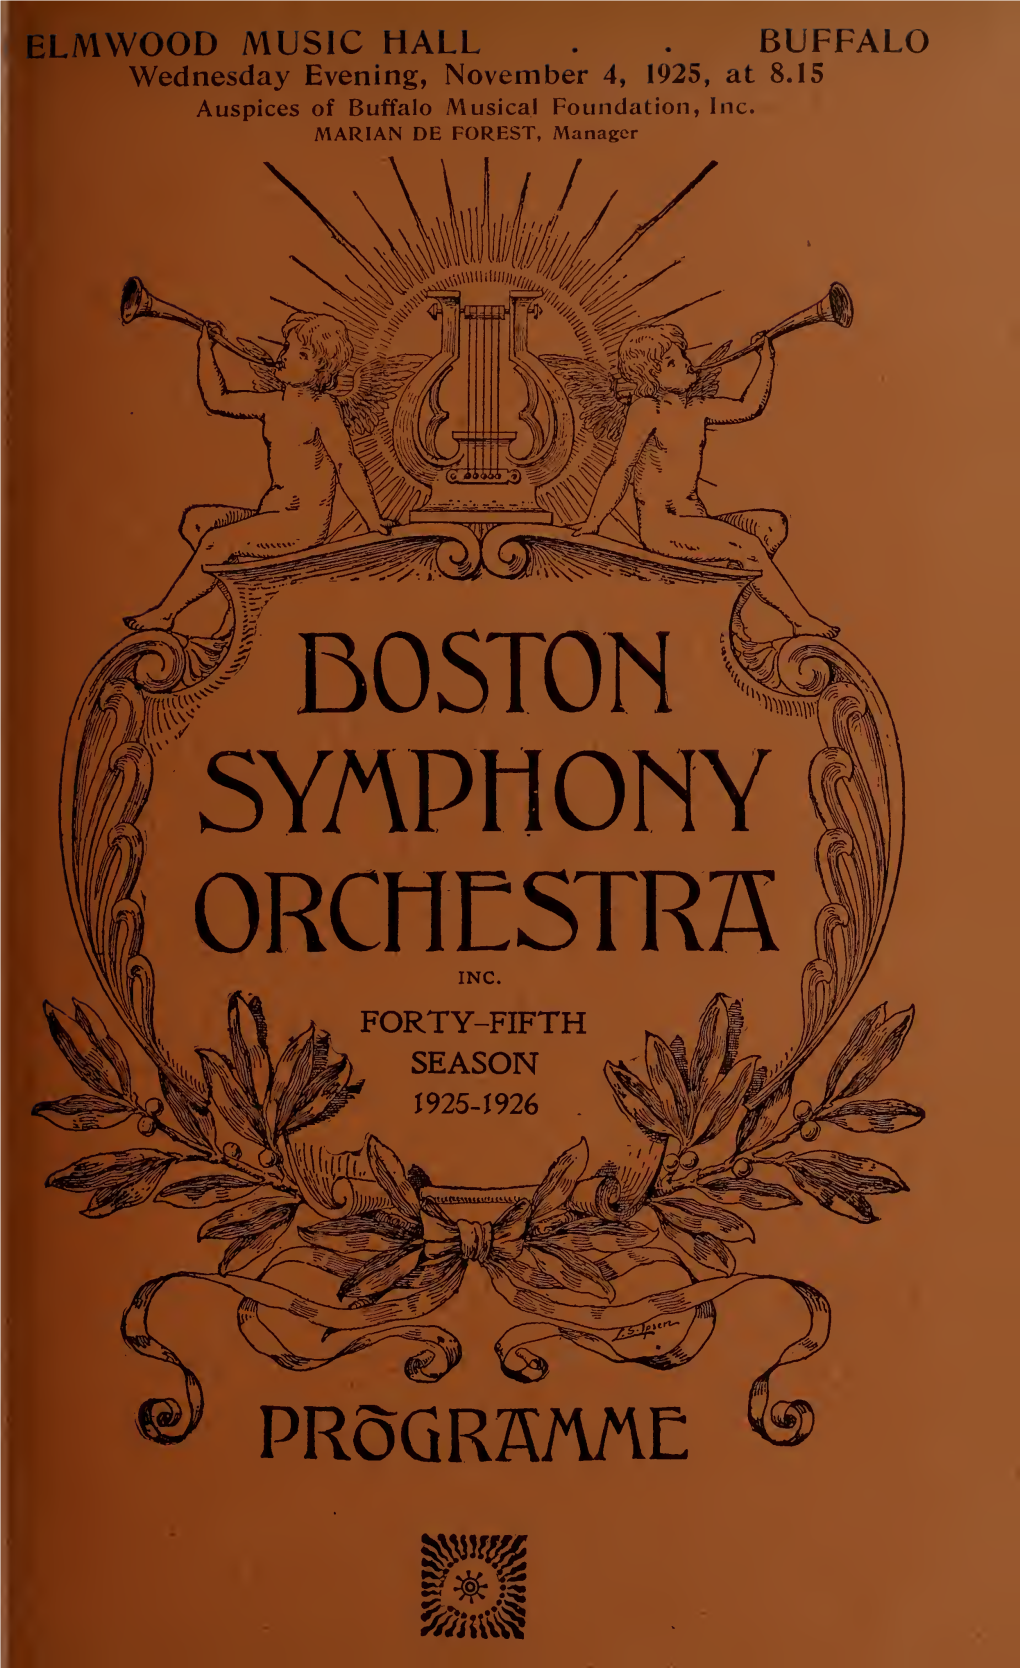 Boston Symphony Orchestra Concert Programs, Season 45,1925